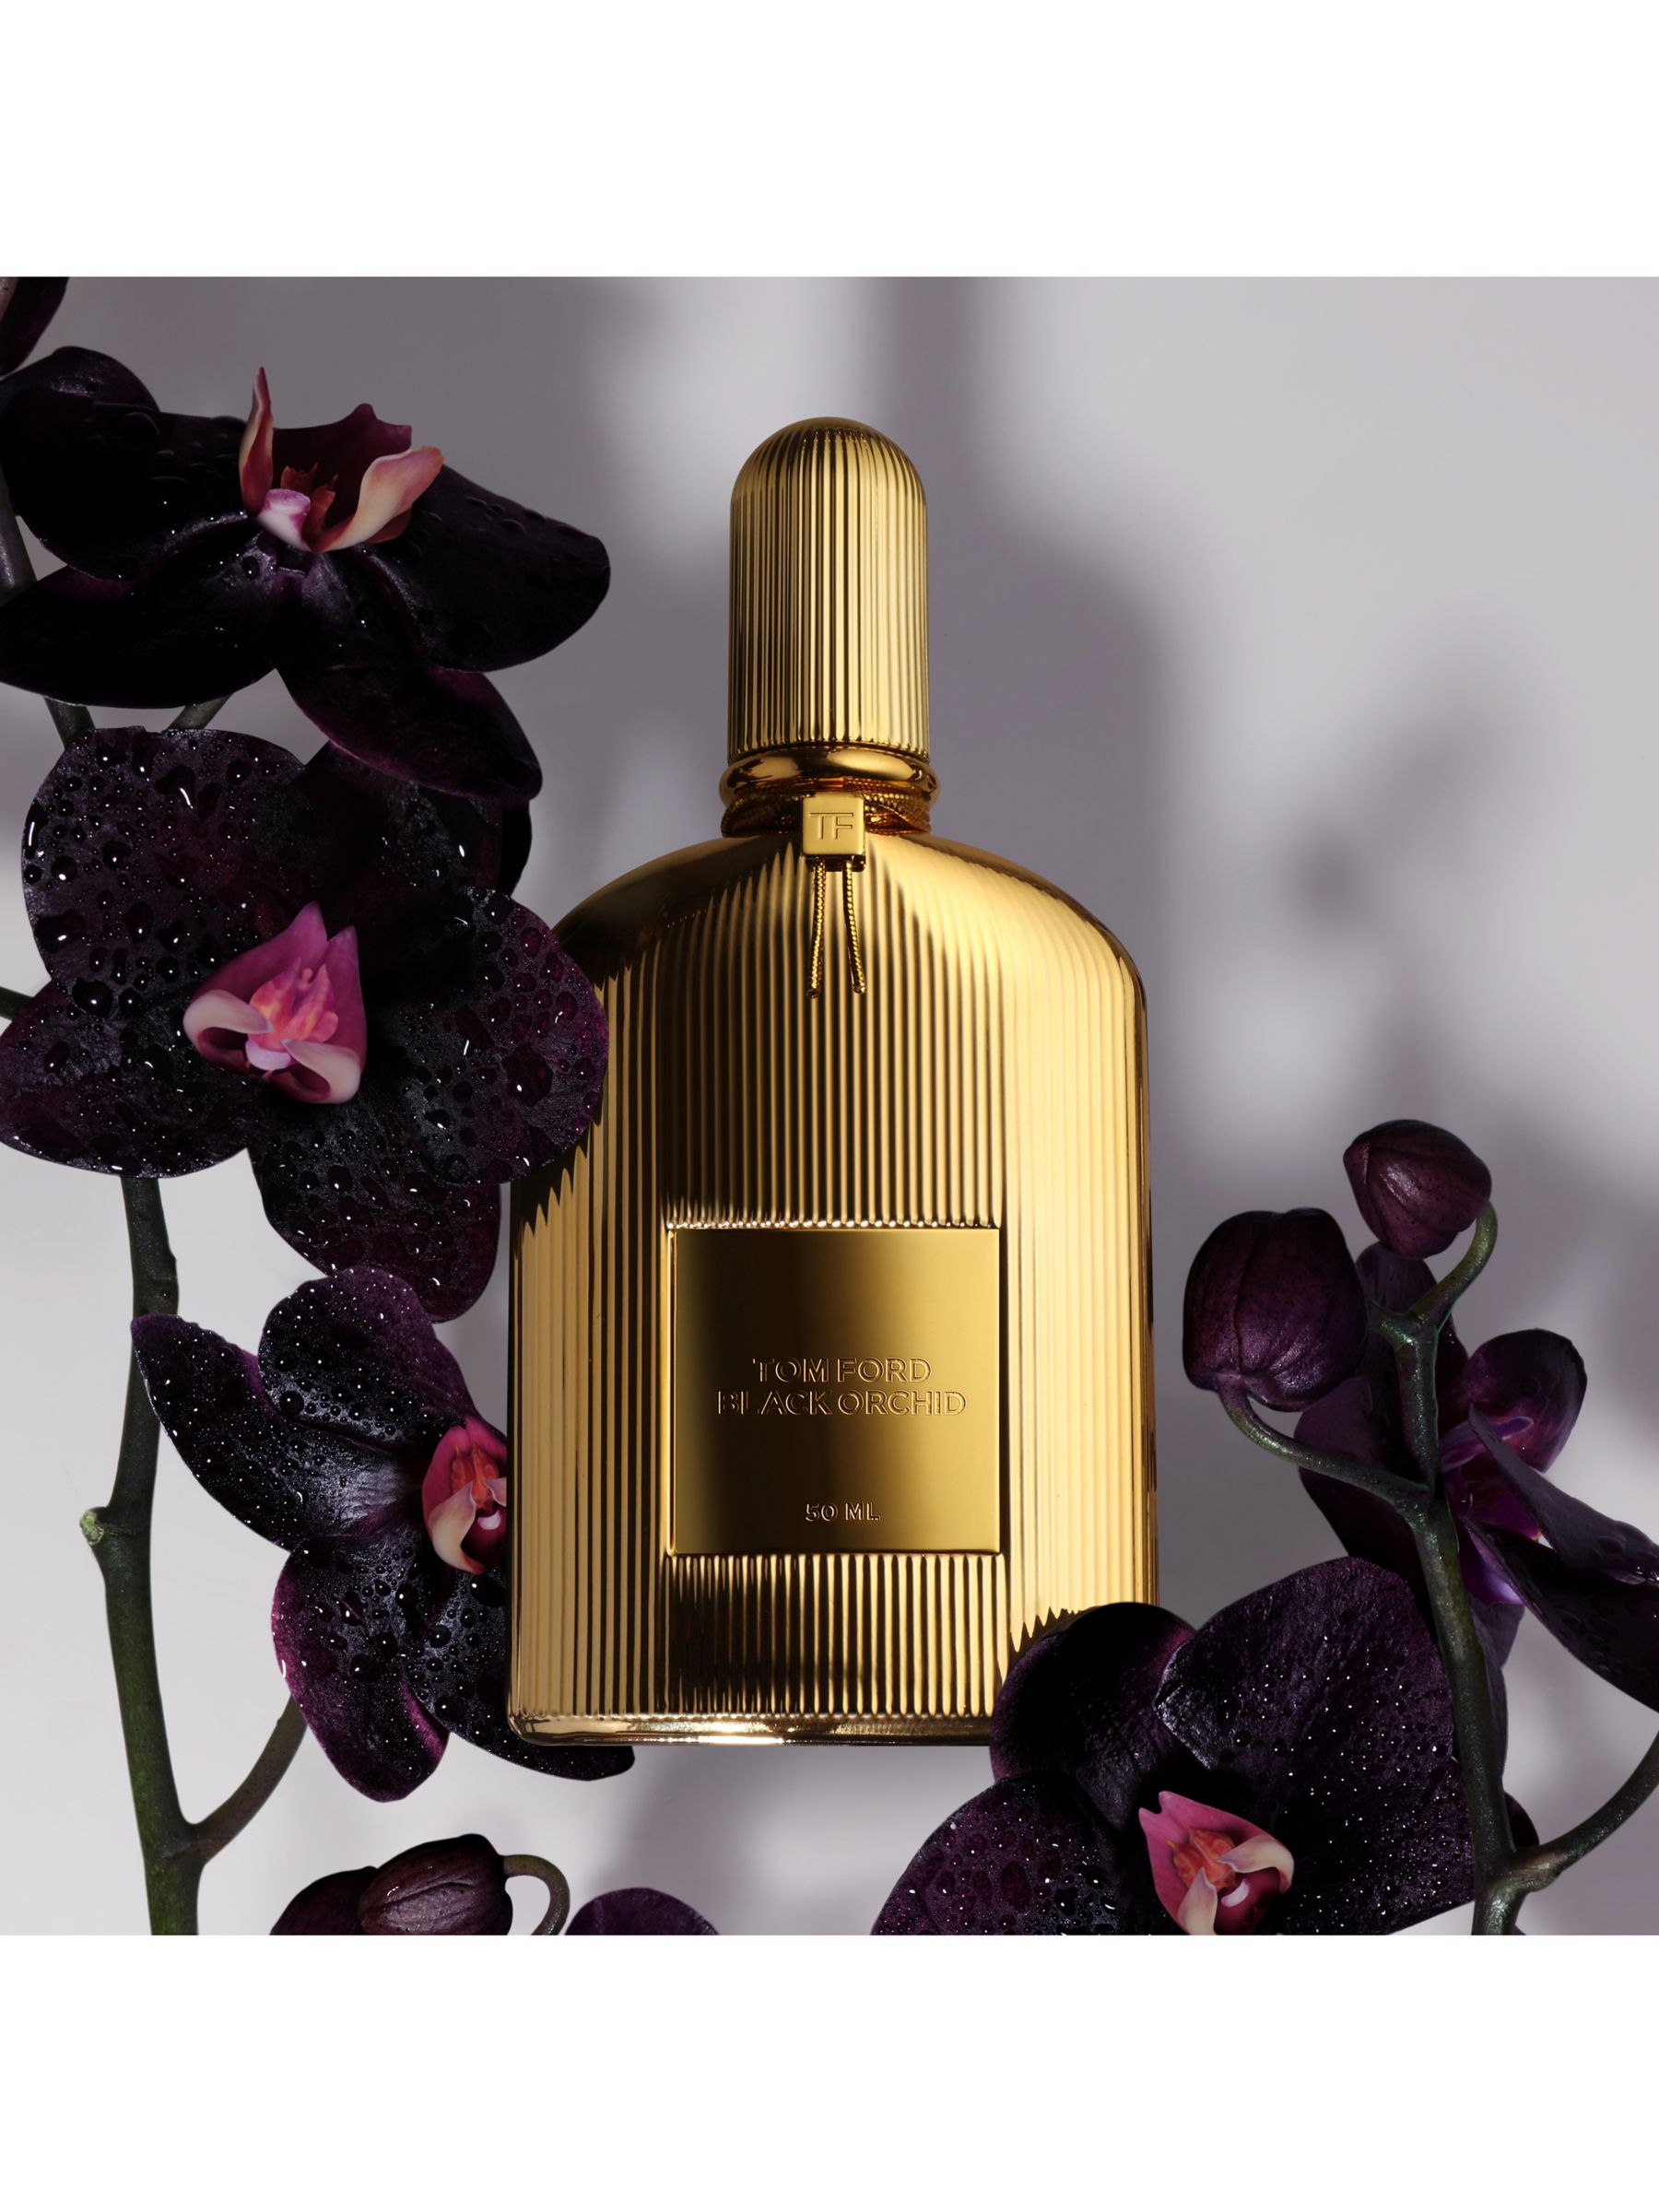 De stad Resultaat Orthodox TOM FORD Black Orchid Parfum